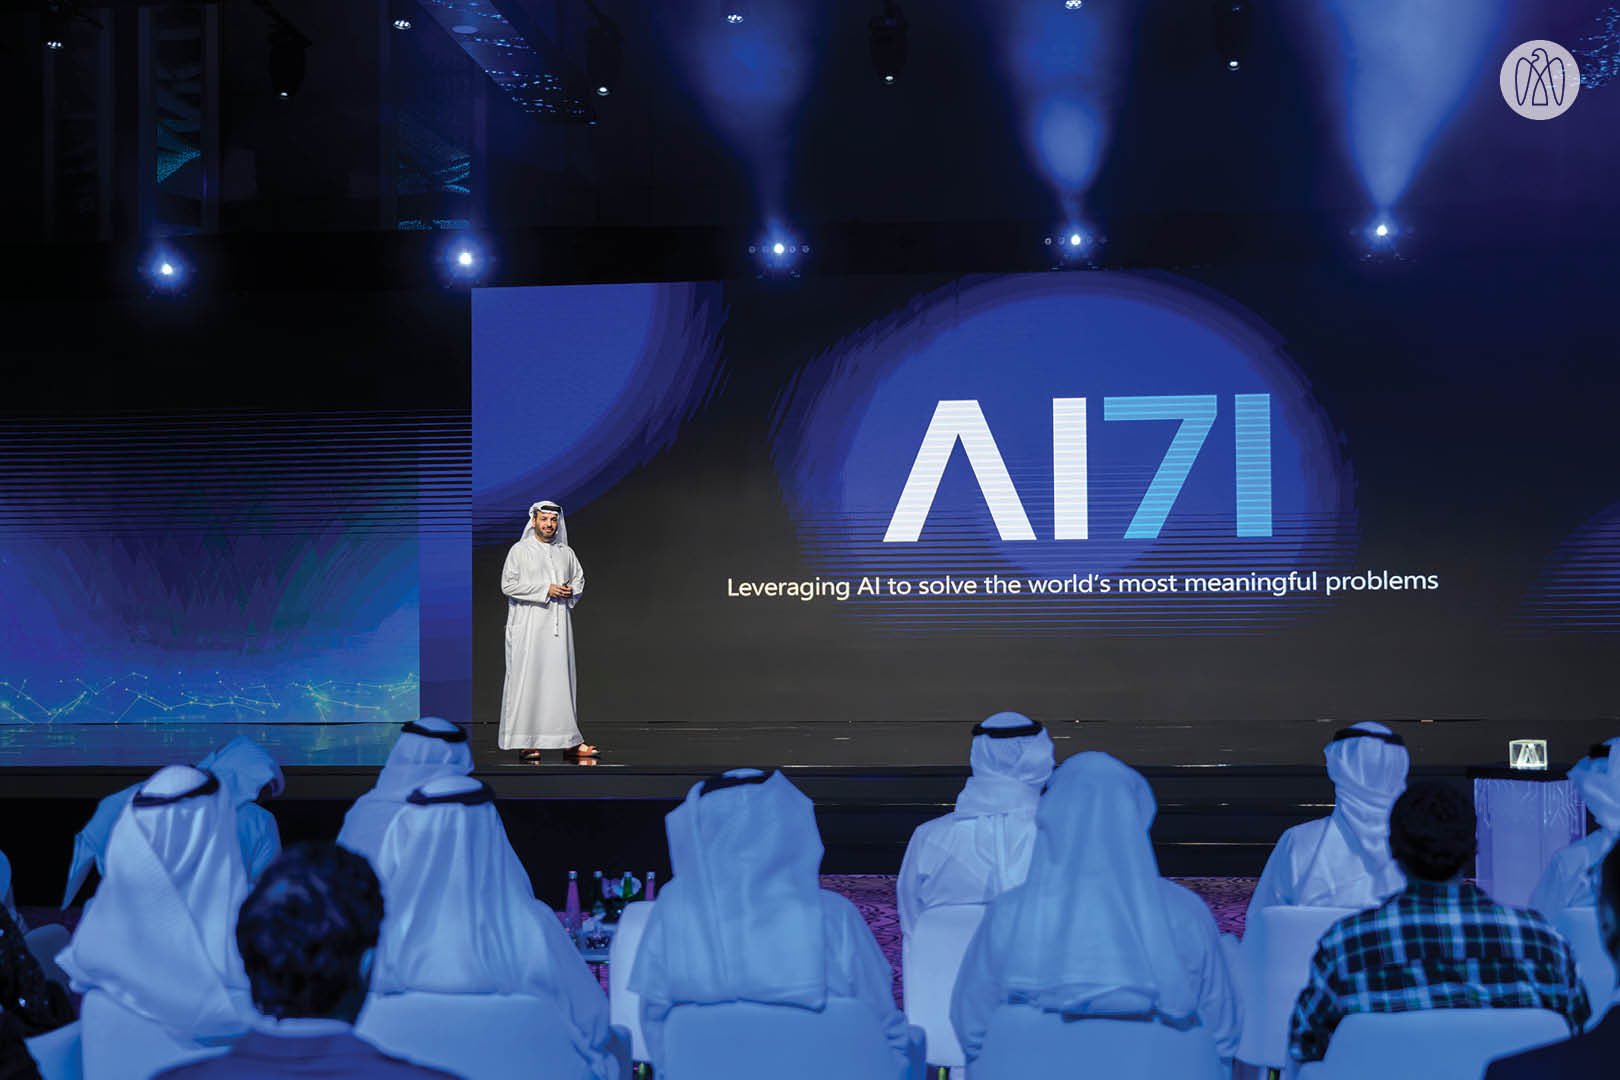 Abu Dhabi’s Advanced Technology Research Council launches ‘AI71’